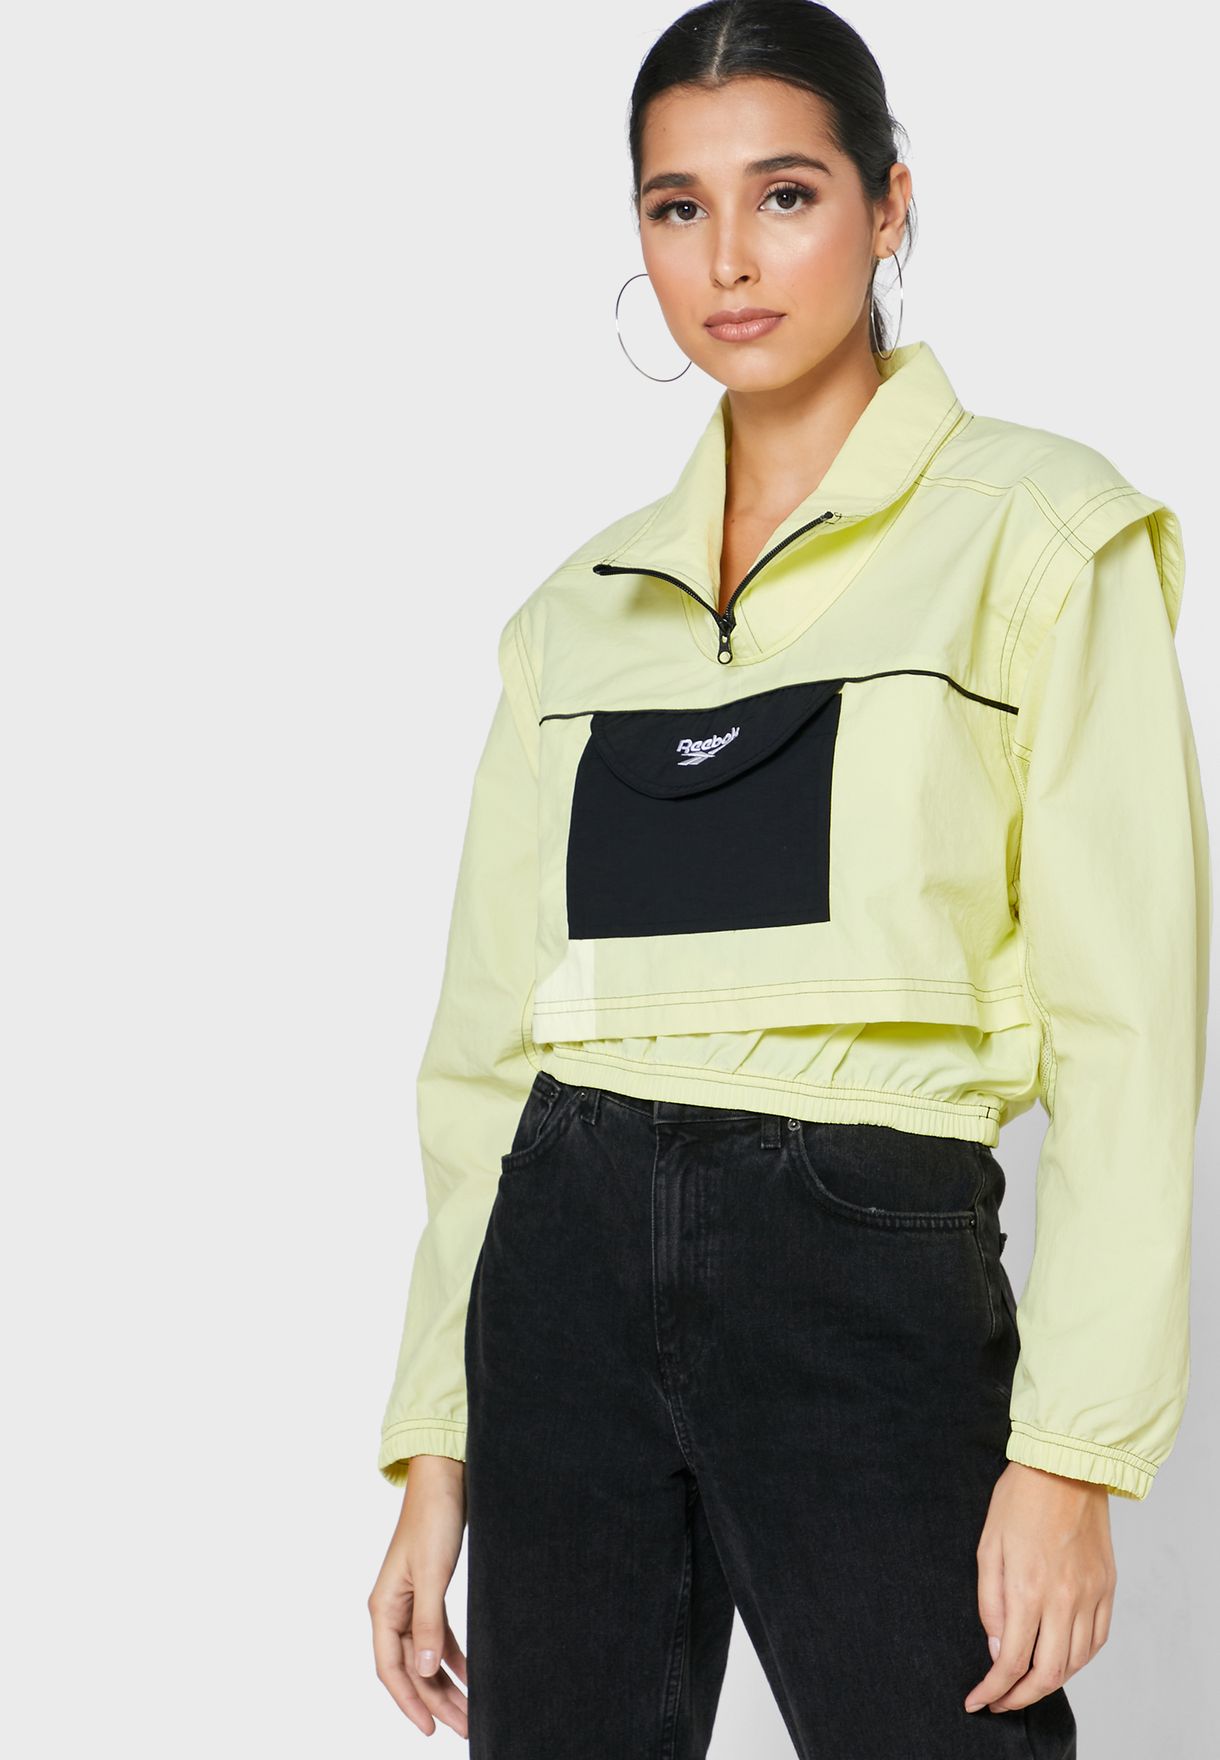 reebok classic jacket womens yellow